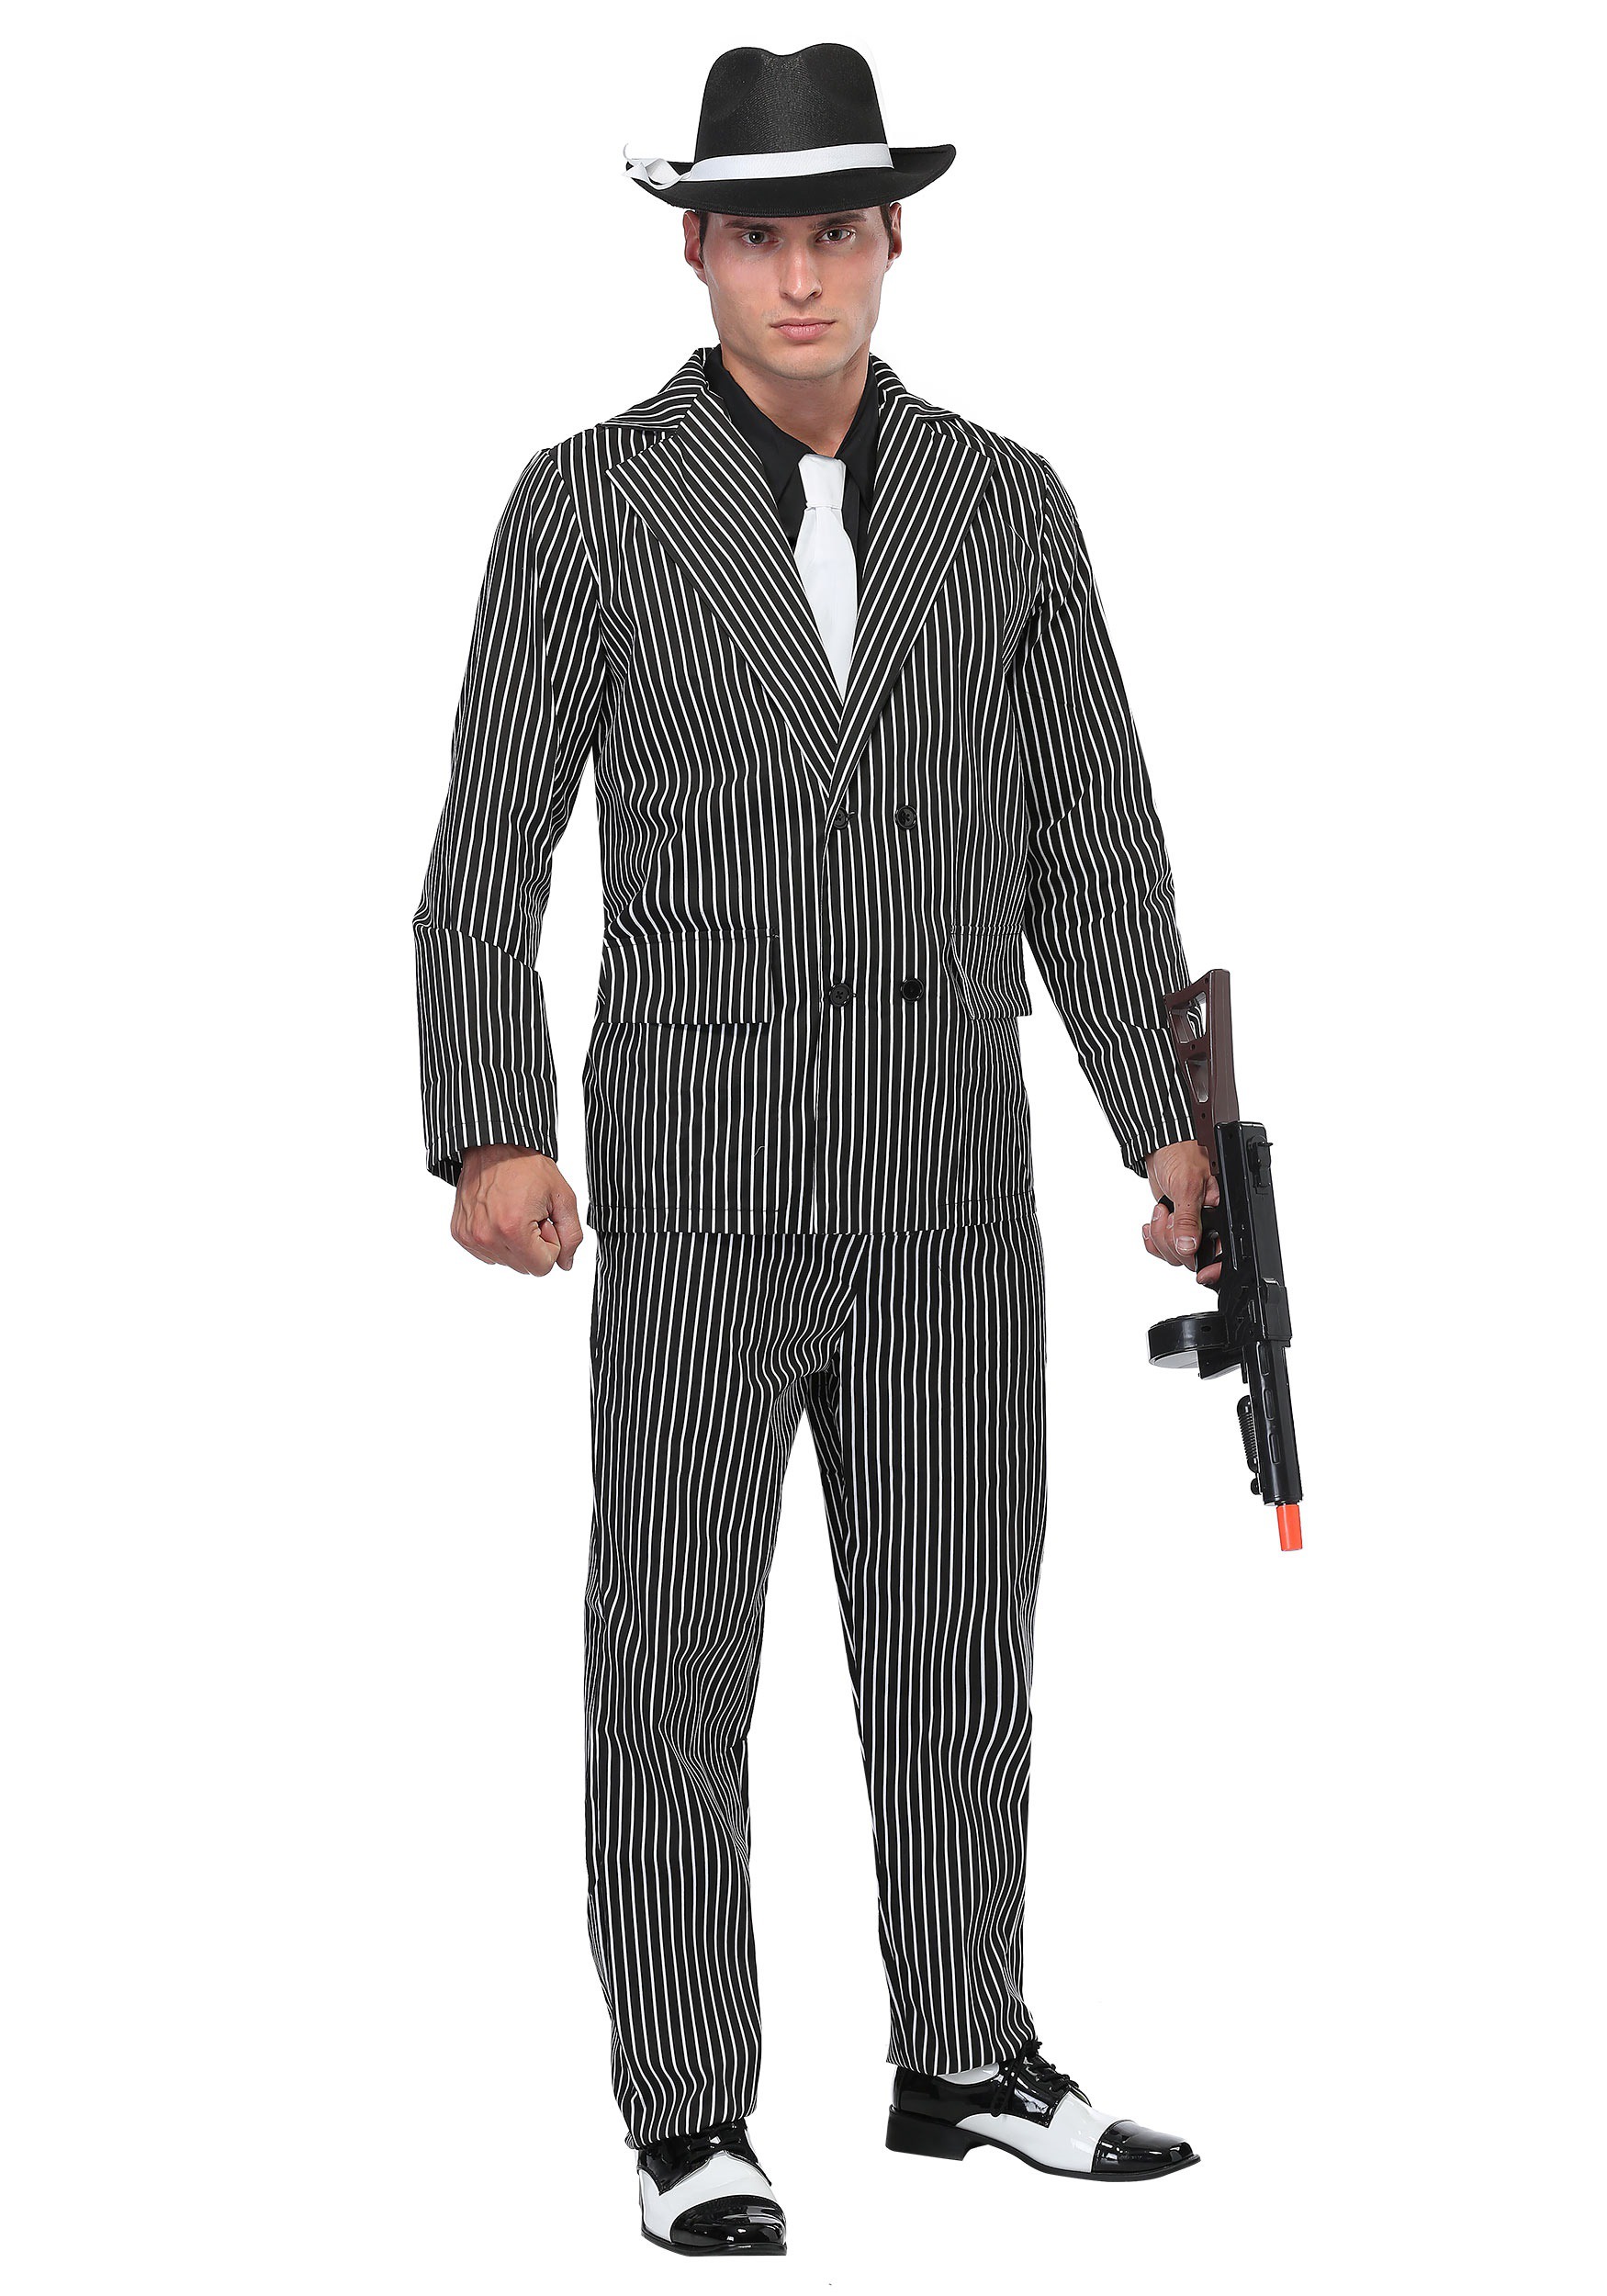 Wide Stripe Plus Size Gangster Costume1 